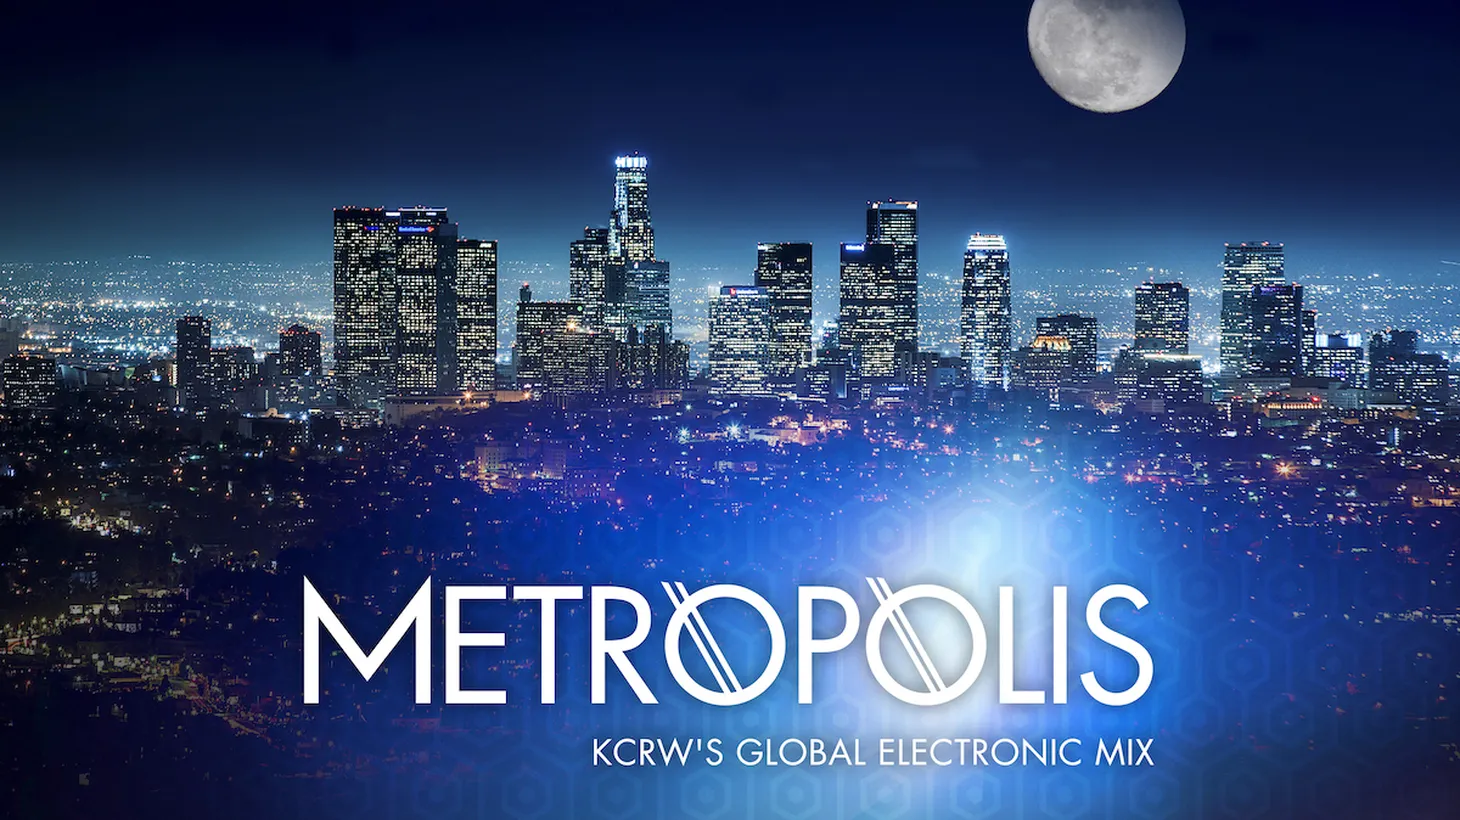 Metropolis playlist, December 19, 2020.